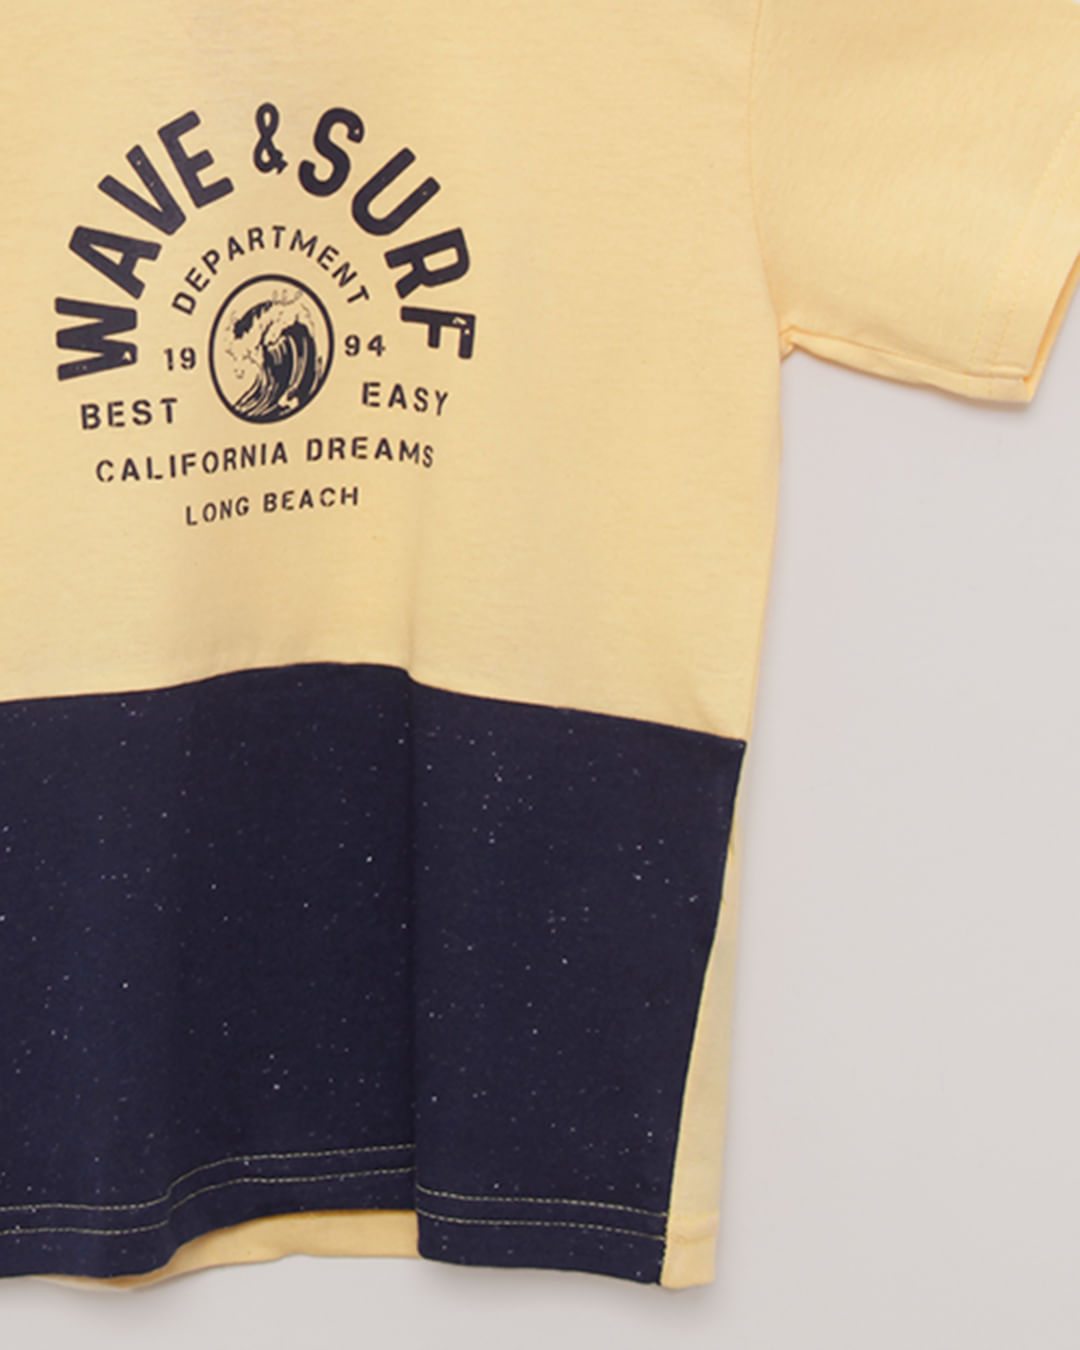 Camiseta-Mc-T38045-Wave-Masc-13---Amarelo-Claro